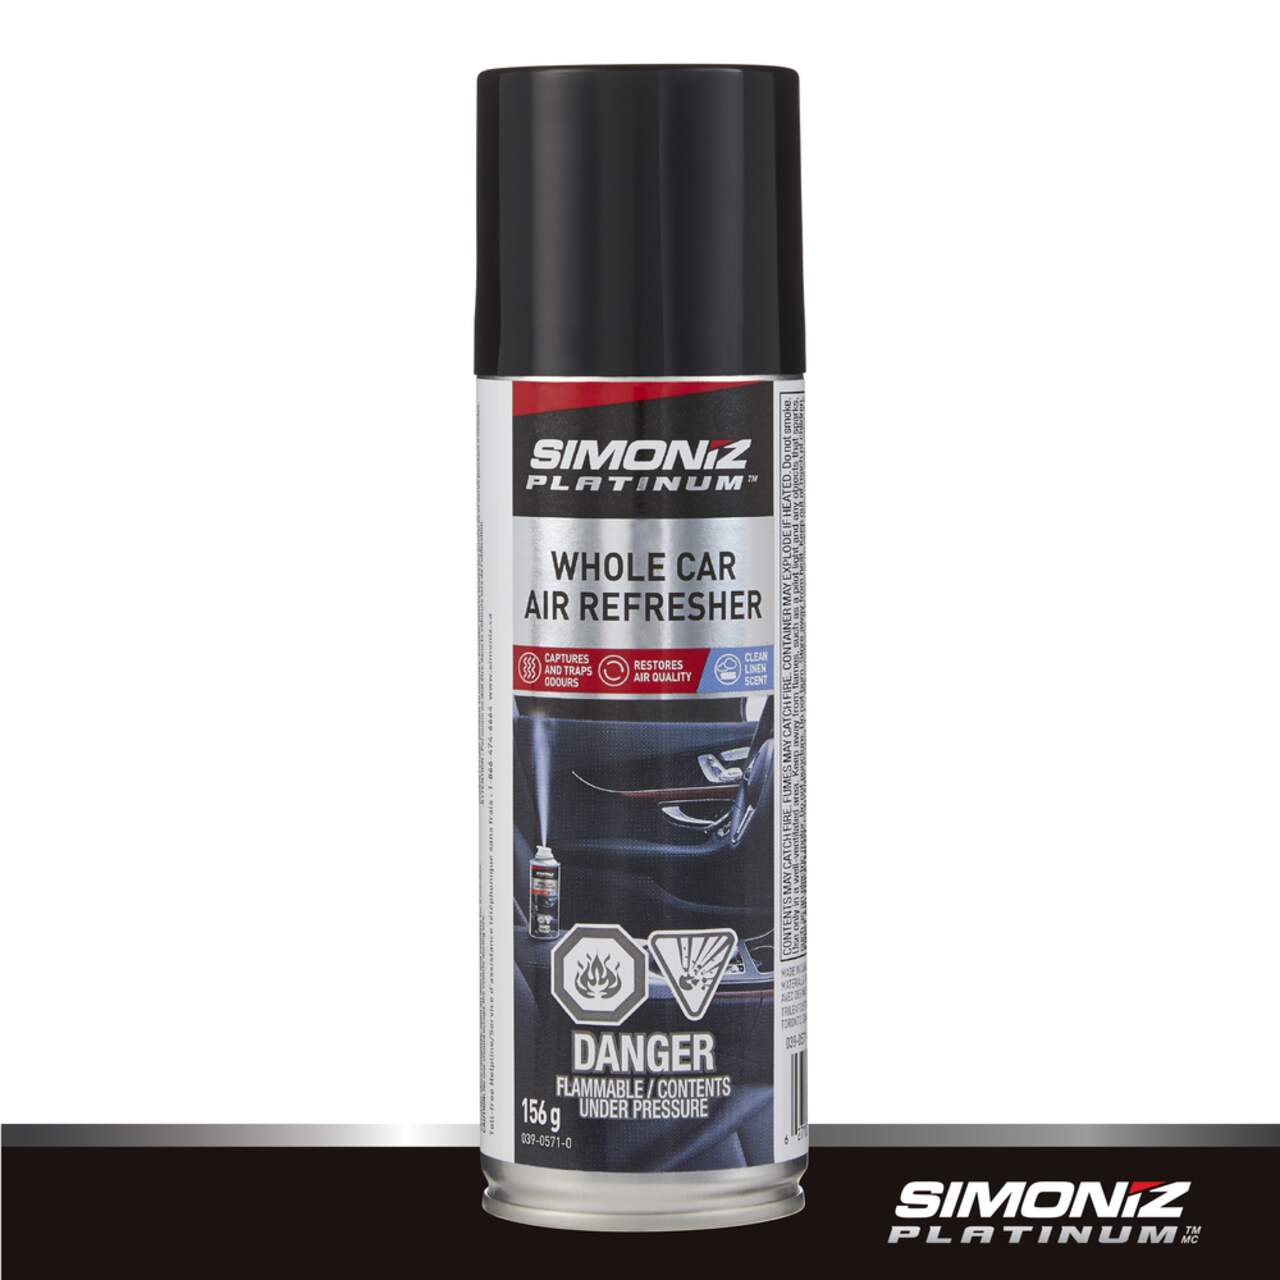 SIMONIZ Platinum Whole Car Air Refresher Spray, Clean Linen Scent, 156-g